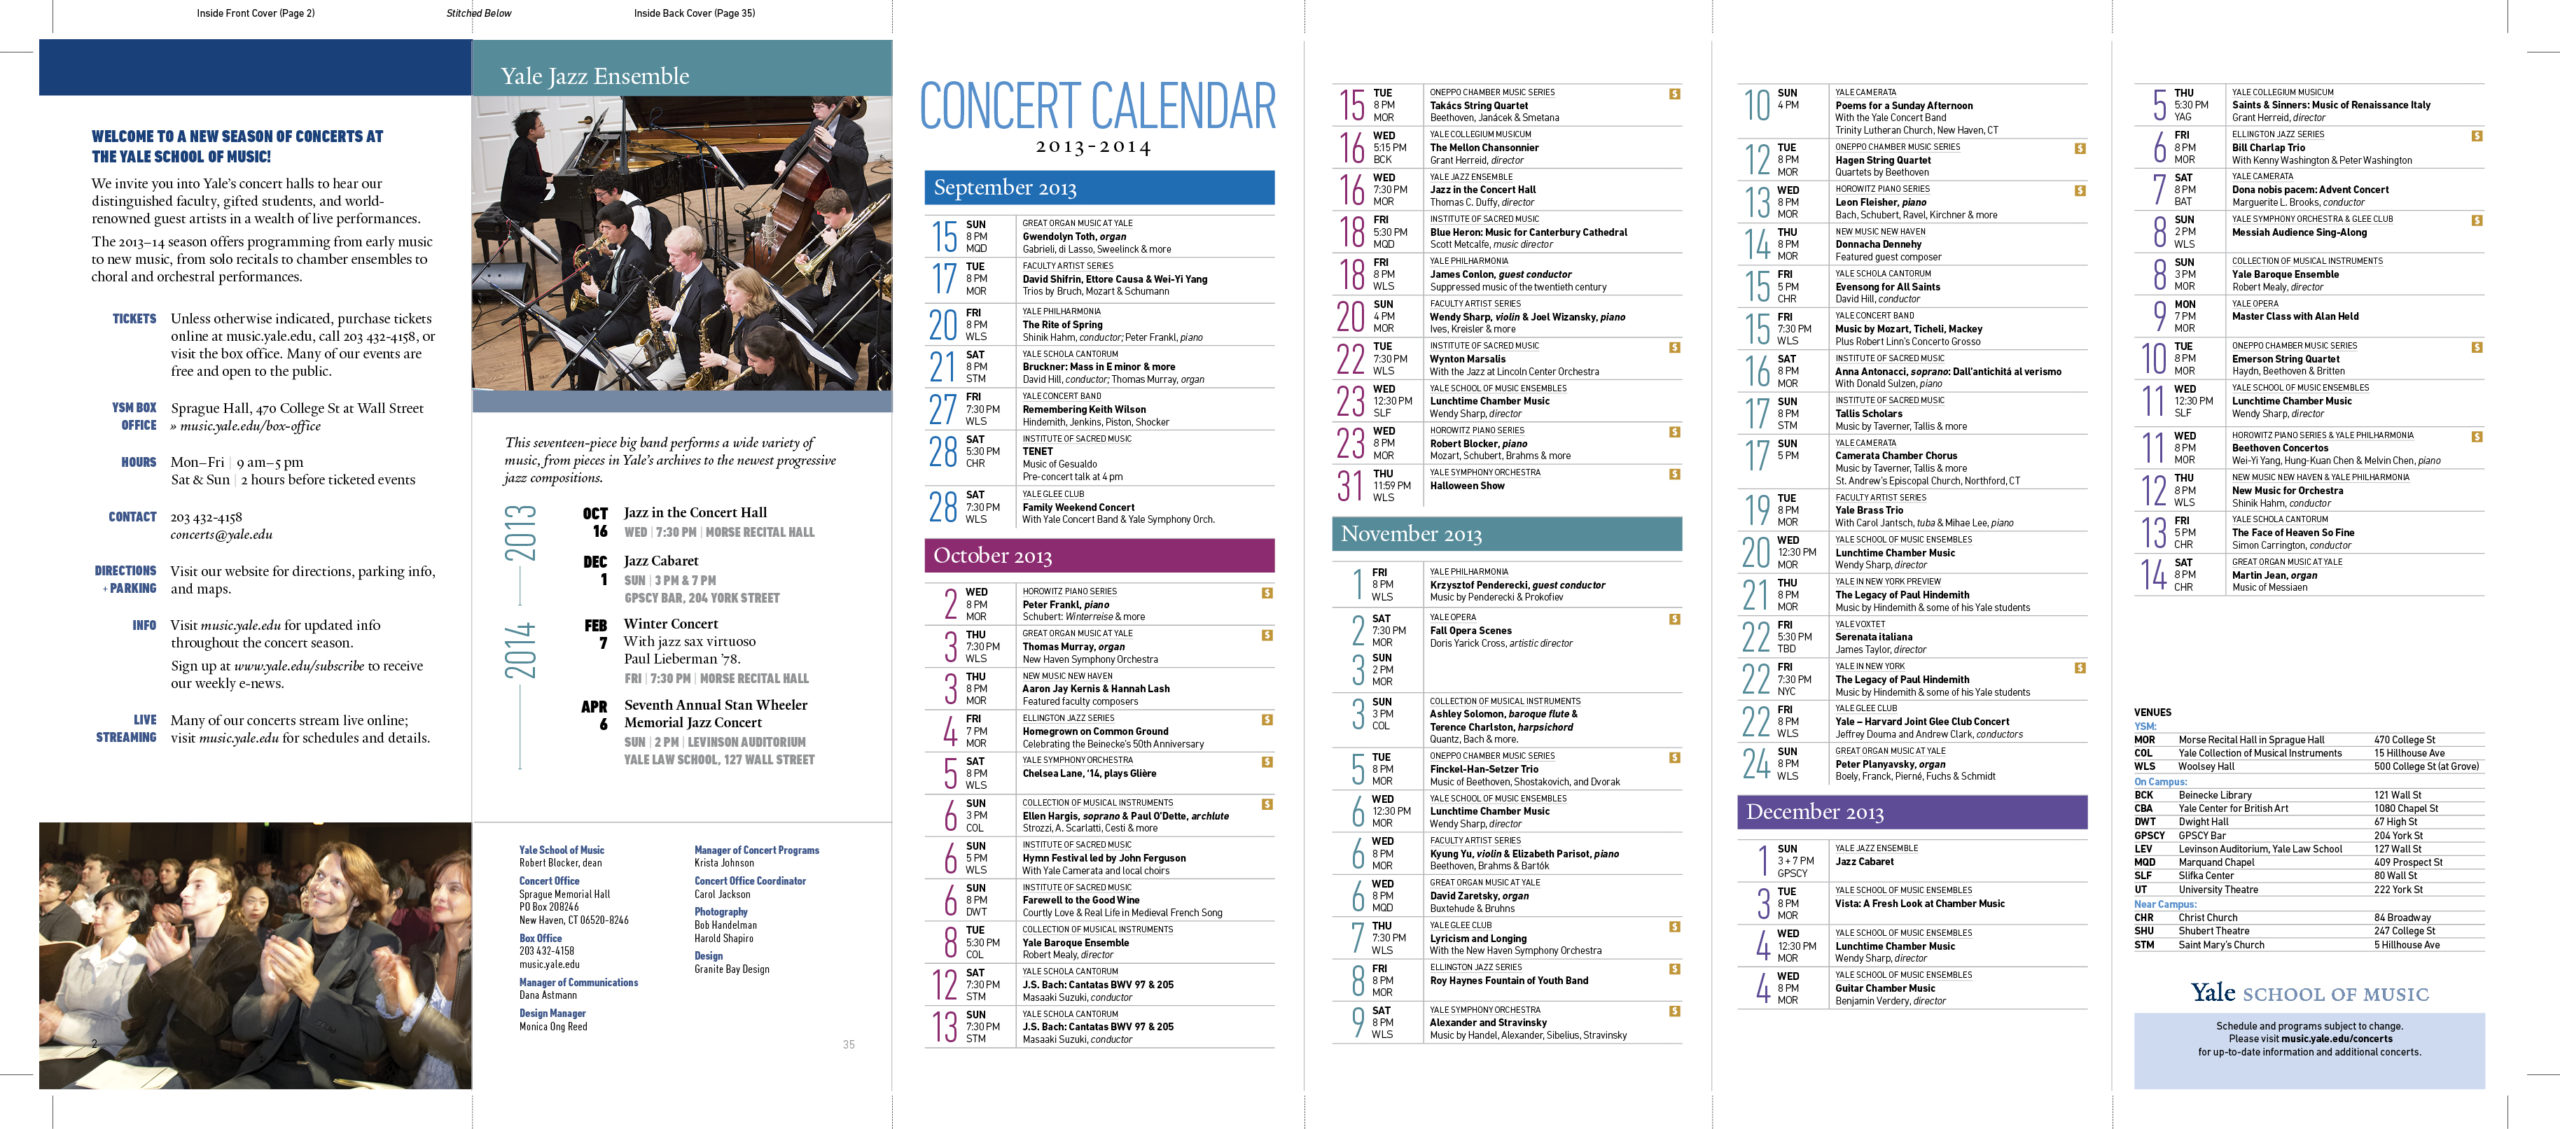 Music at Yale University Season Program / Schedule / Calendar by Granite Bay Graphic Design: 6-Panel Foldout